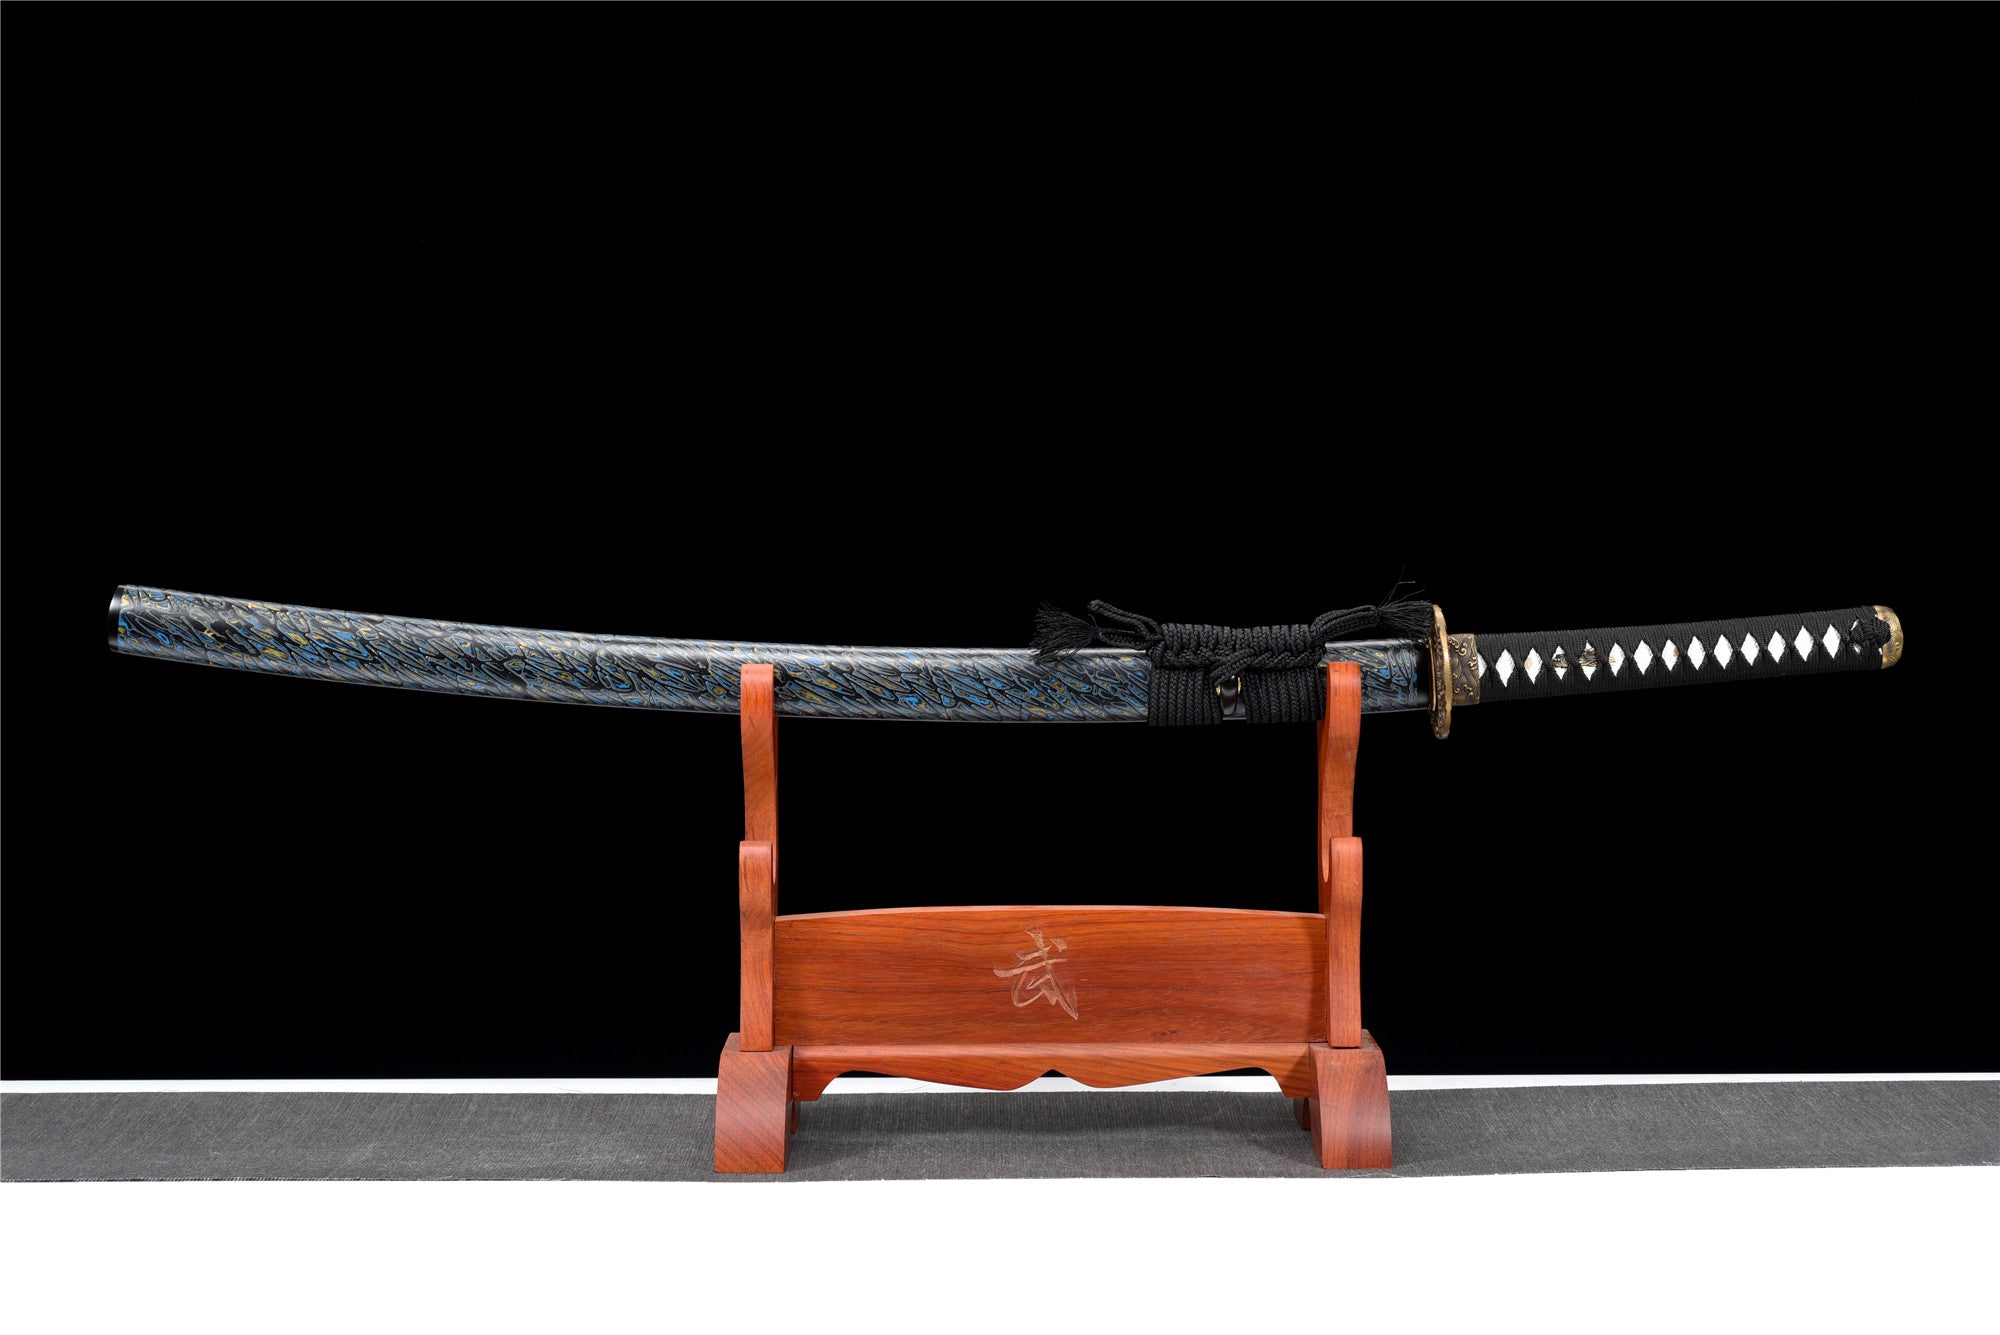 Blue Devils Katana,Japanese Samurai Sword,Real Handmade Katana,Roasted blue pattern blade,Damascus steel